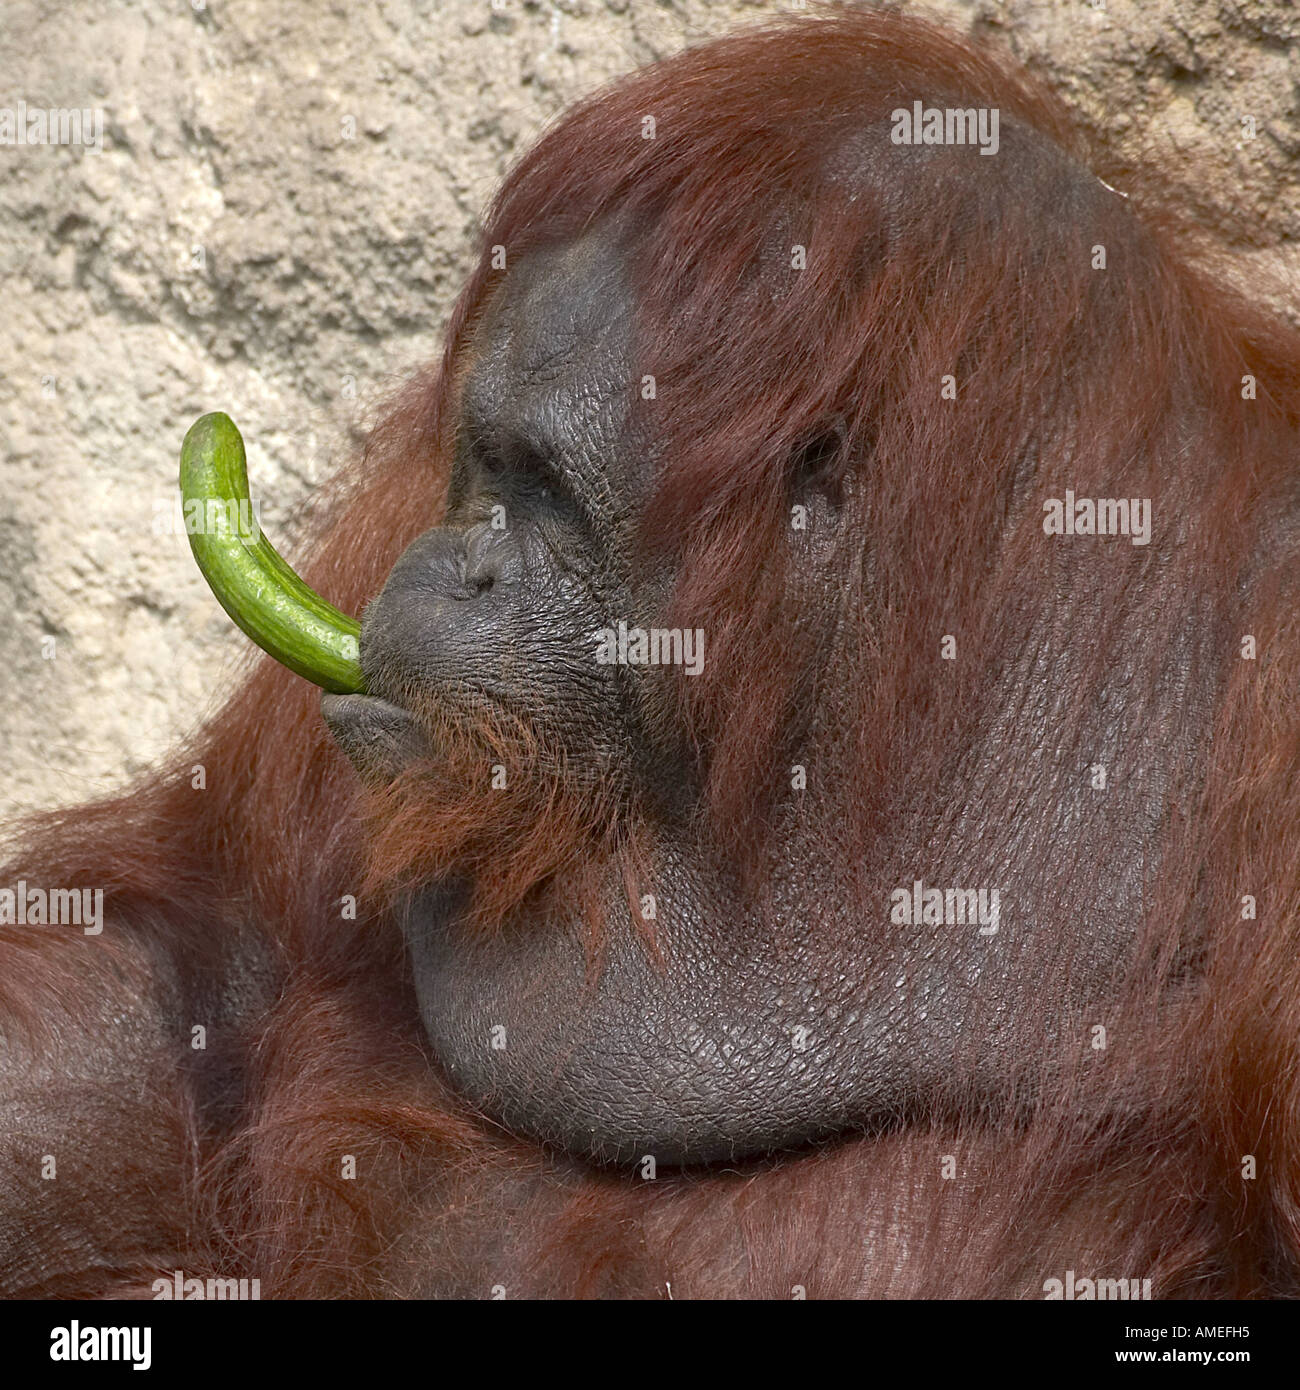 orang-utan, orangutan, orang-outang (Pongo pygmaeus), portrait of an adult male, with cucumber in the mouth Stock Photo